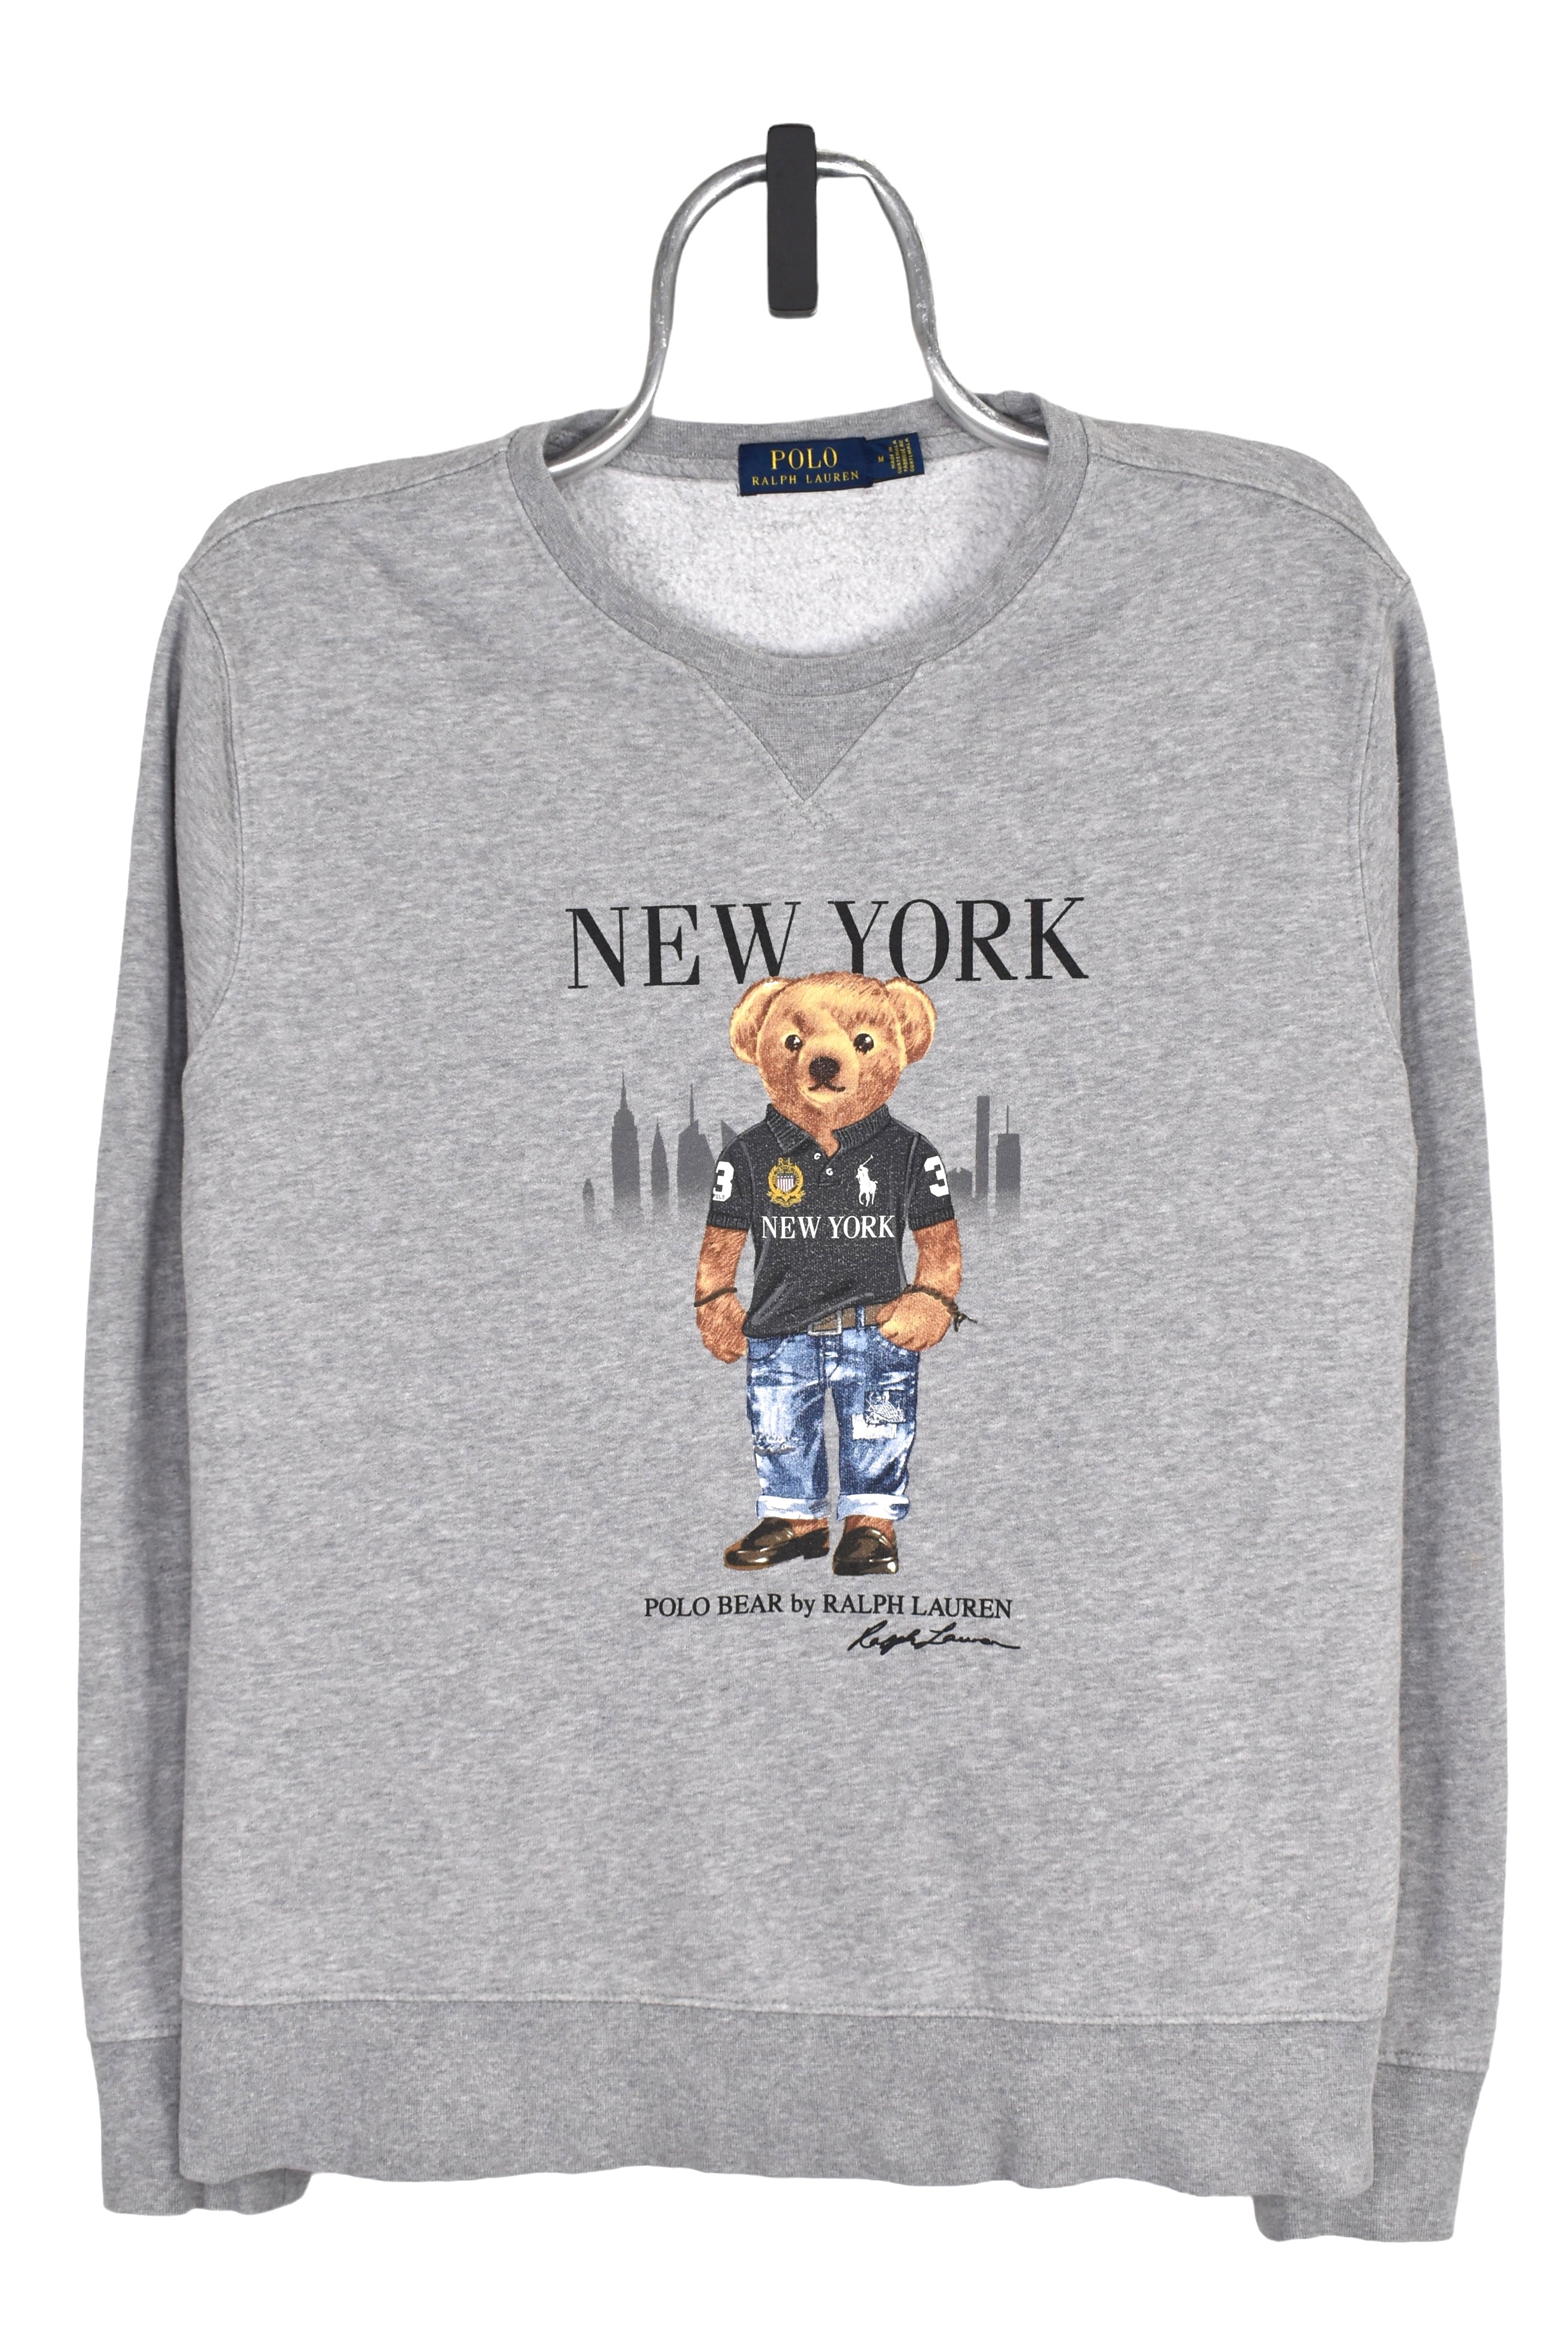 Vintage Ralph Lauren sweatshirt (M), grey Polo Bear crewneck